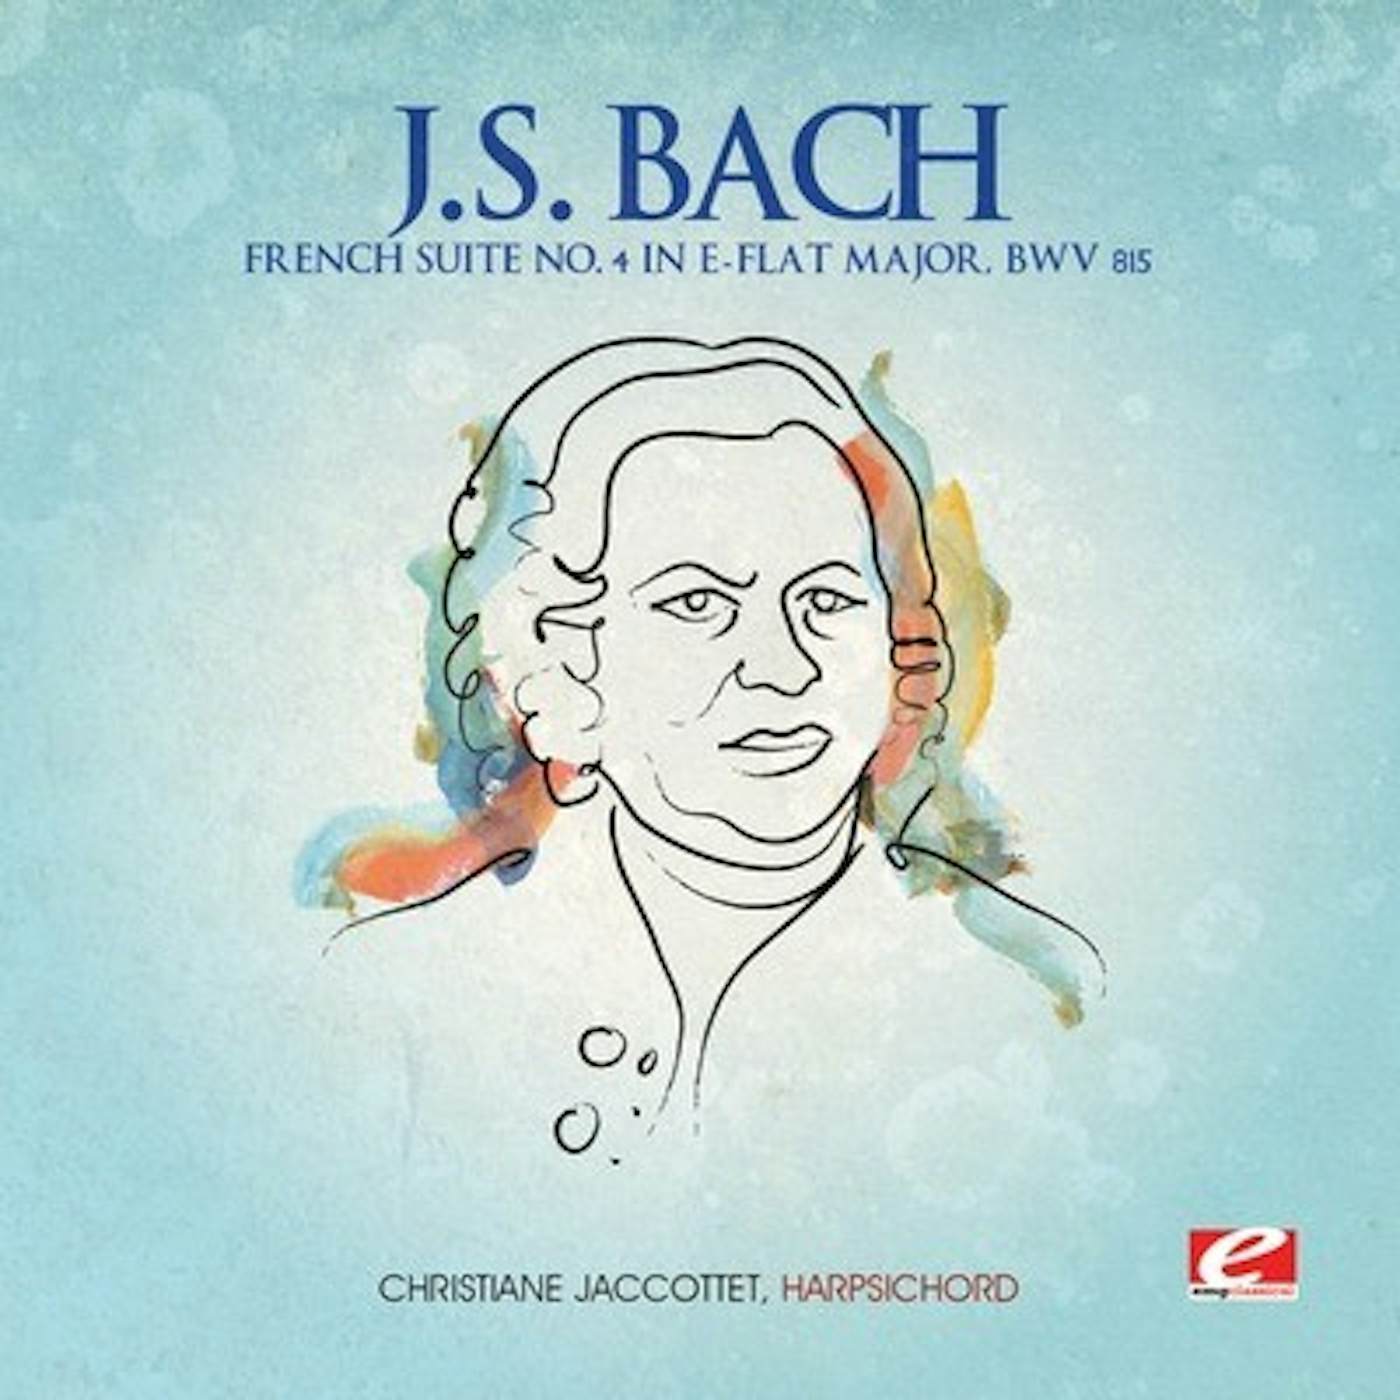 Johann Sebastian Bach FRENCH SUITE 4 E-FLAT MAJOR CD